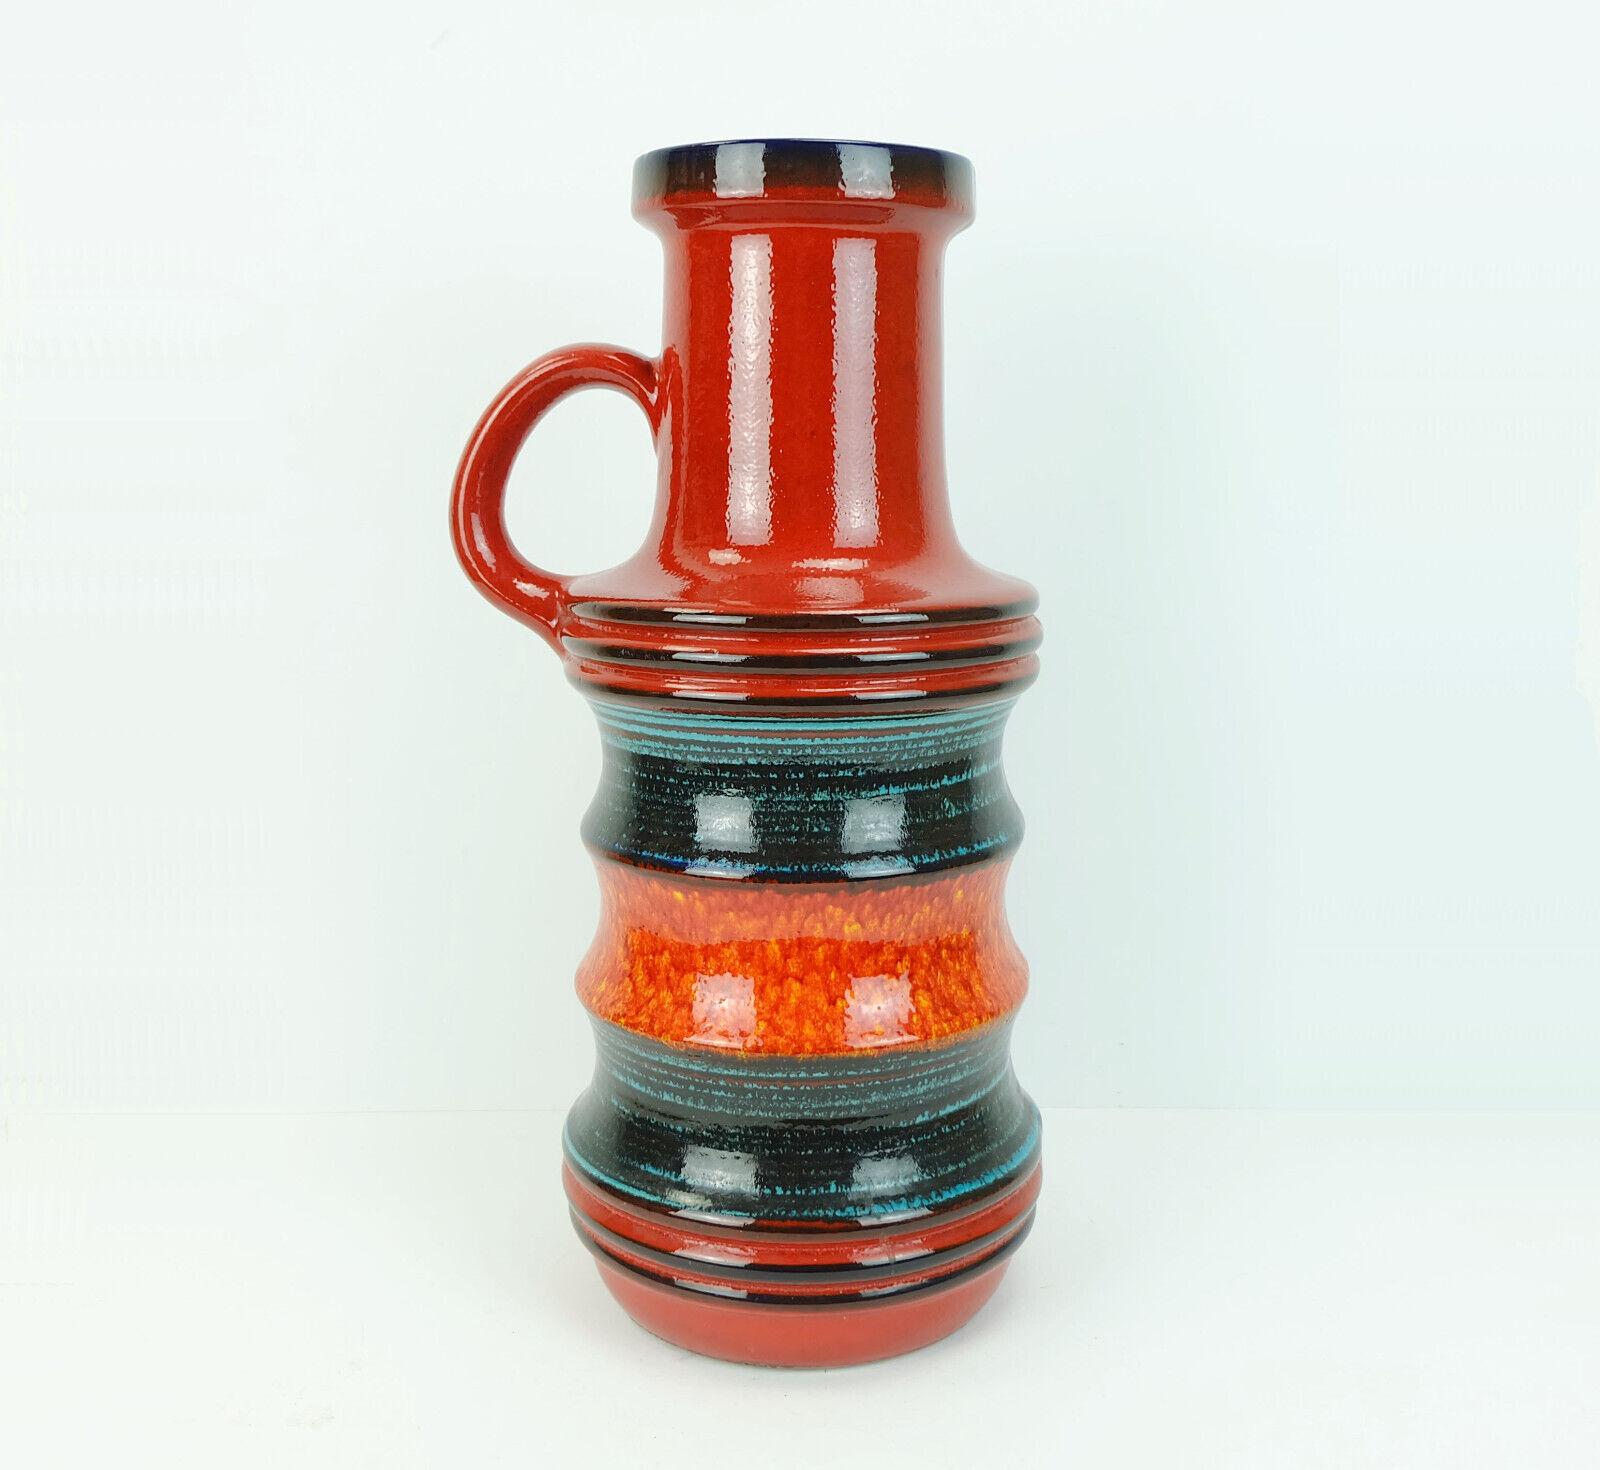 German large scheurich ceramic floorvase model 427-47 stripe pattern red orange black